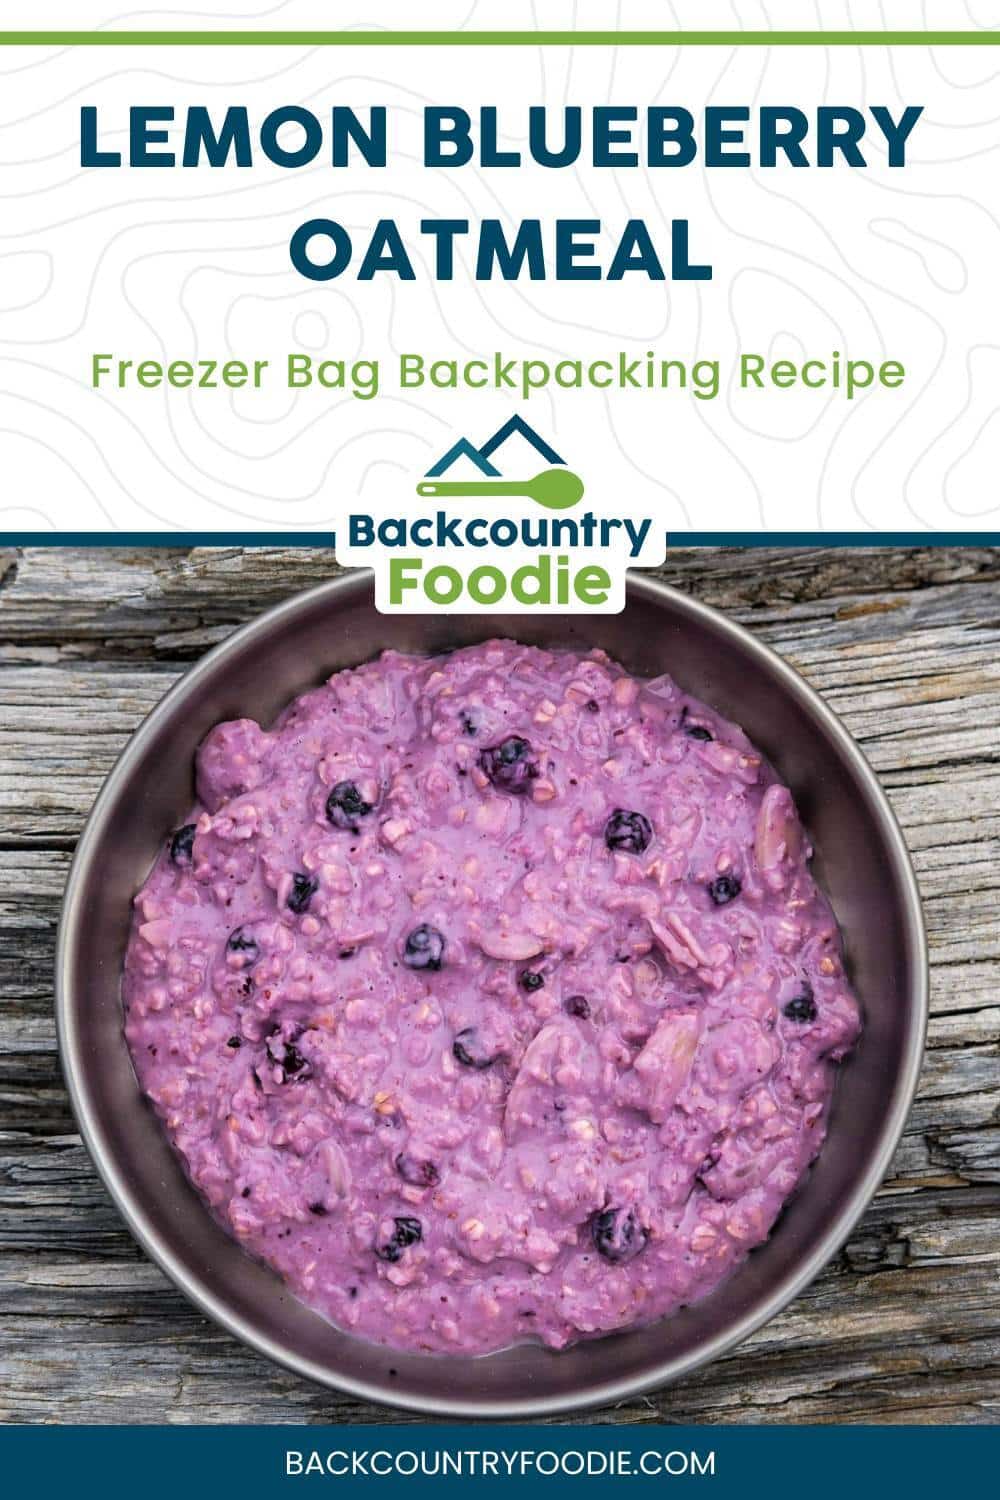 Backcountry Foodie's Lemon Blueberry Oatmeal ultralight backpacking breakfast recipe